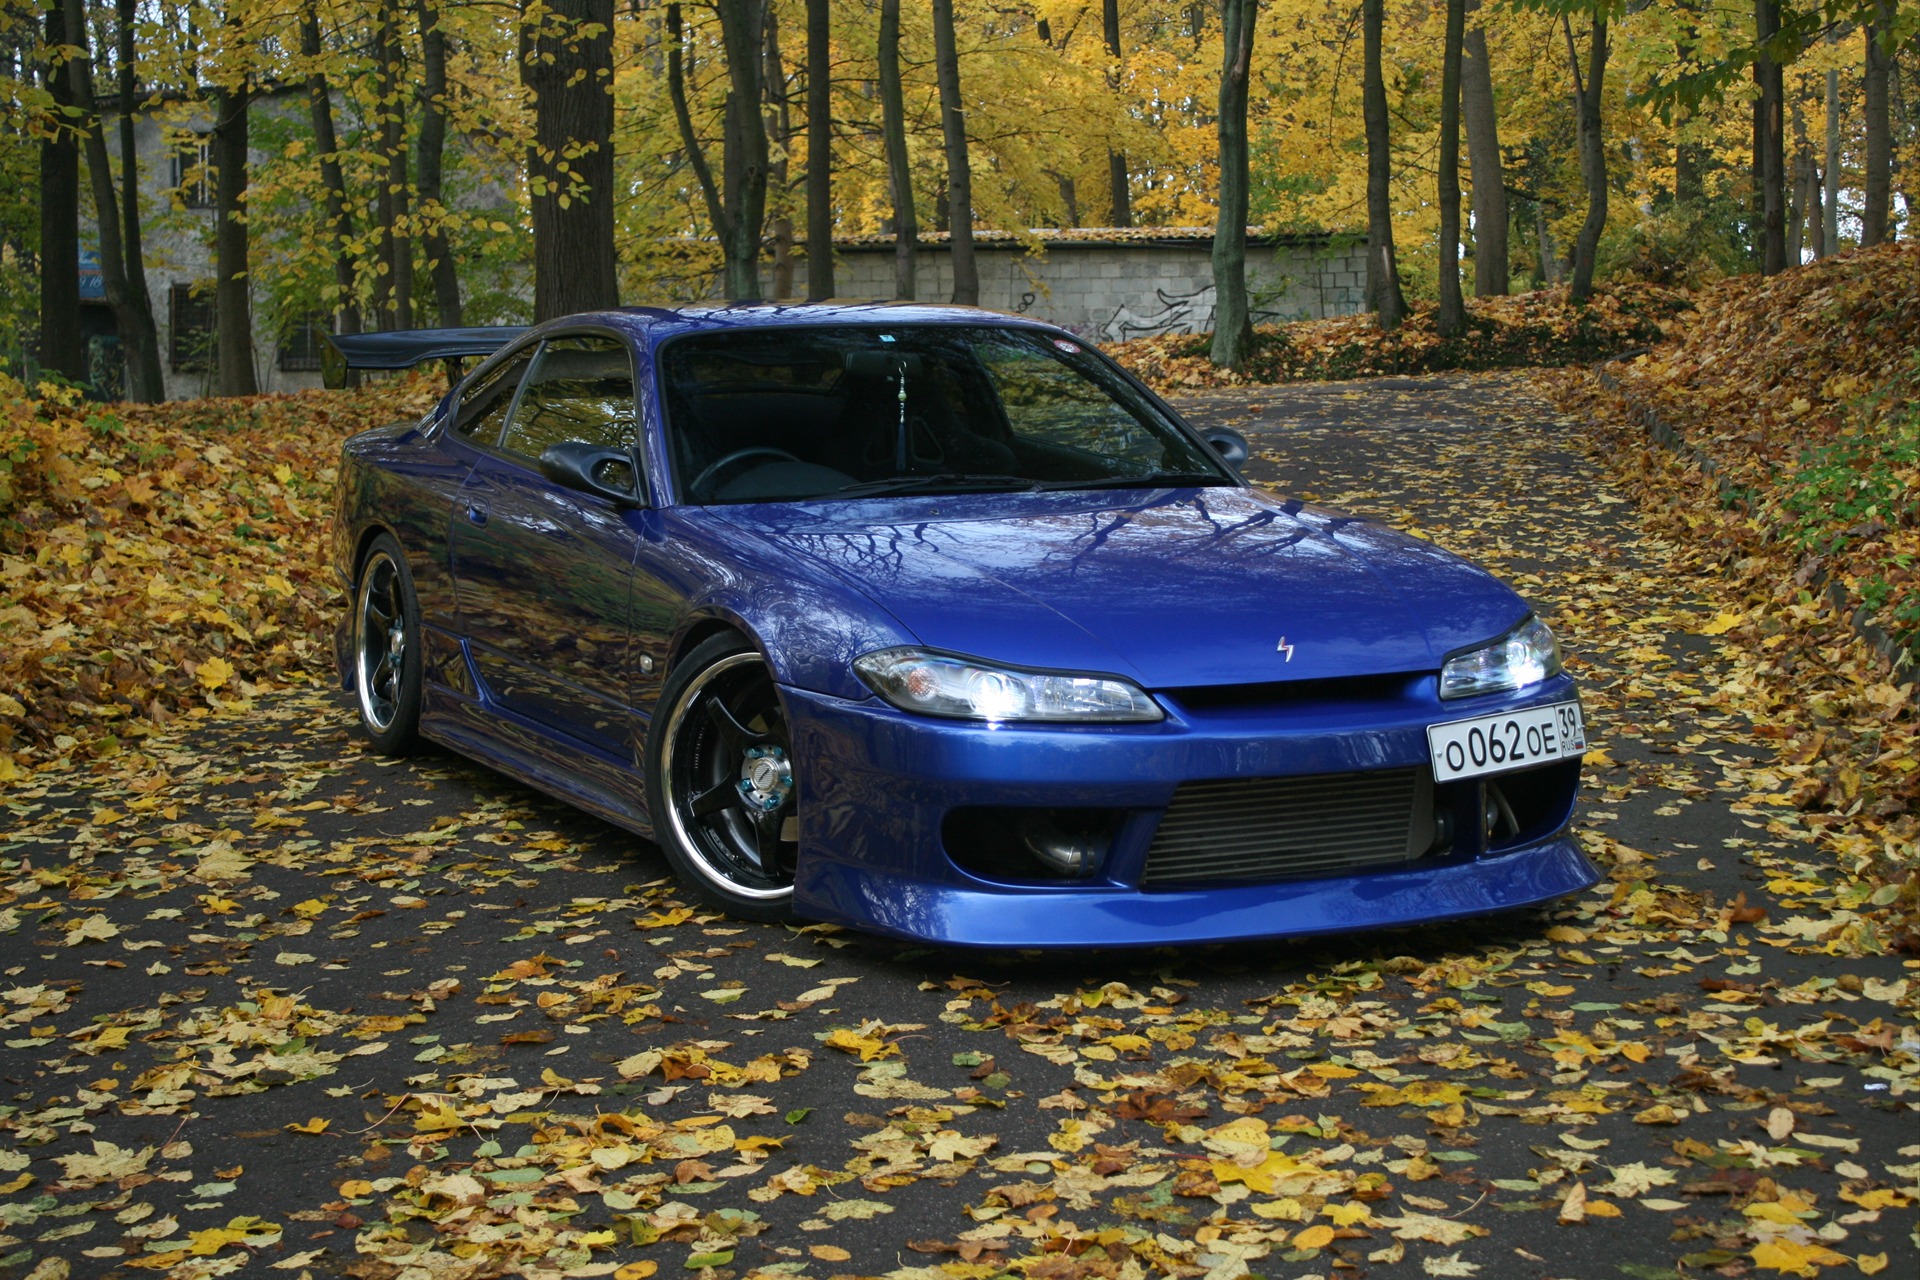 Silvia s15 купить. Nissan Silvia s15 слива. Nissan Silvia 15. Ниссан слива с 15.